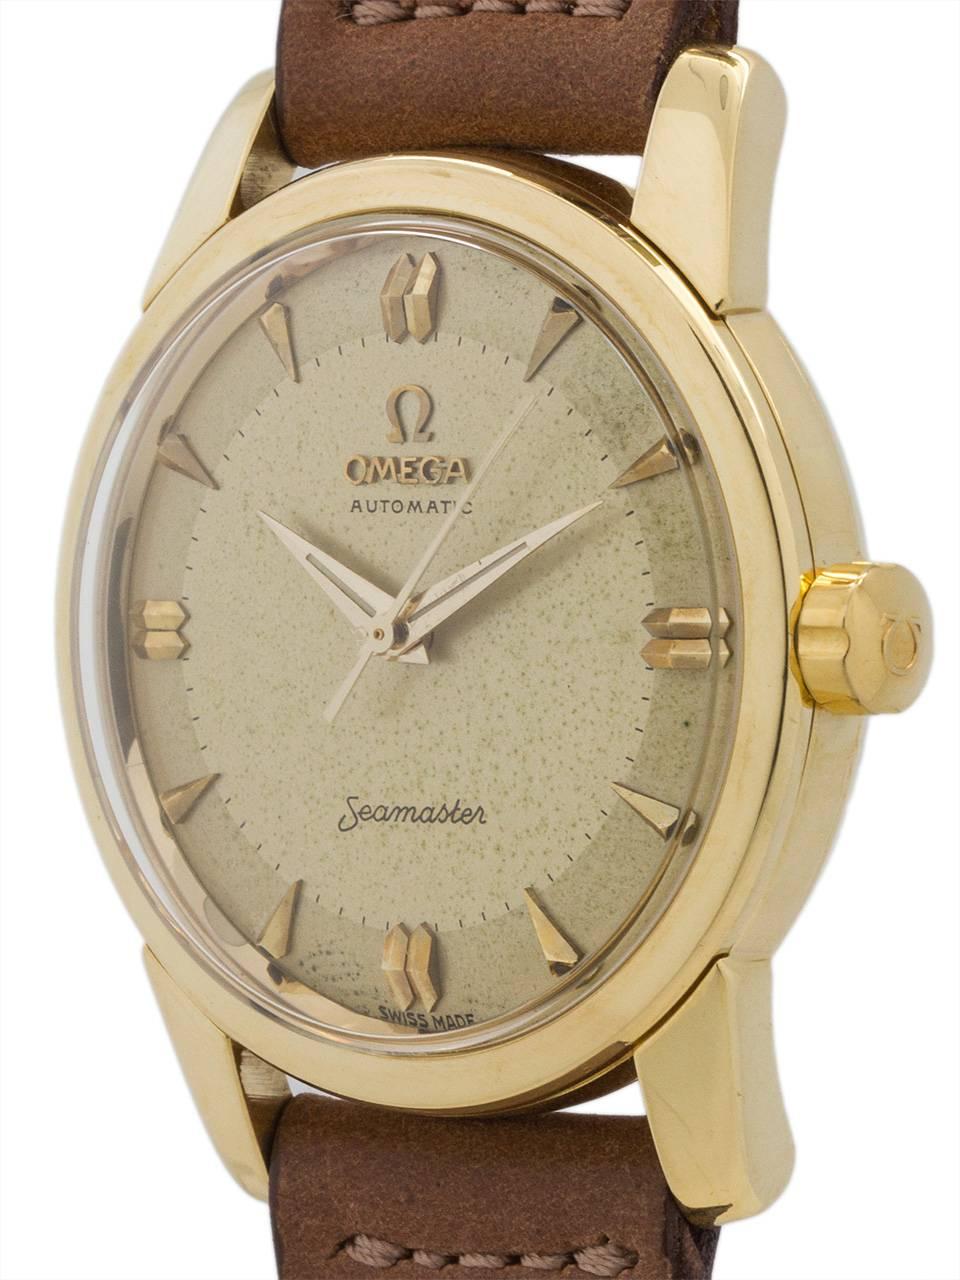 1943 omega watch